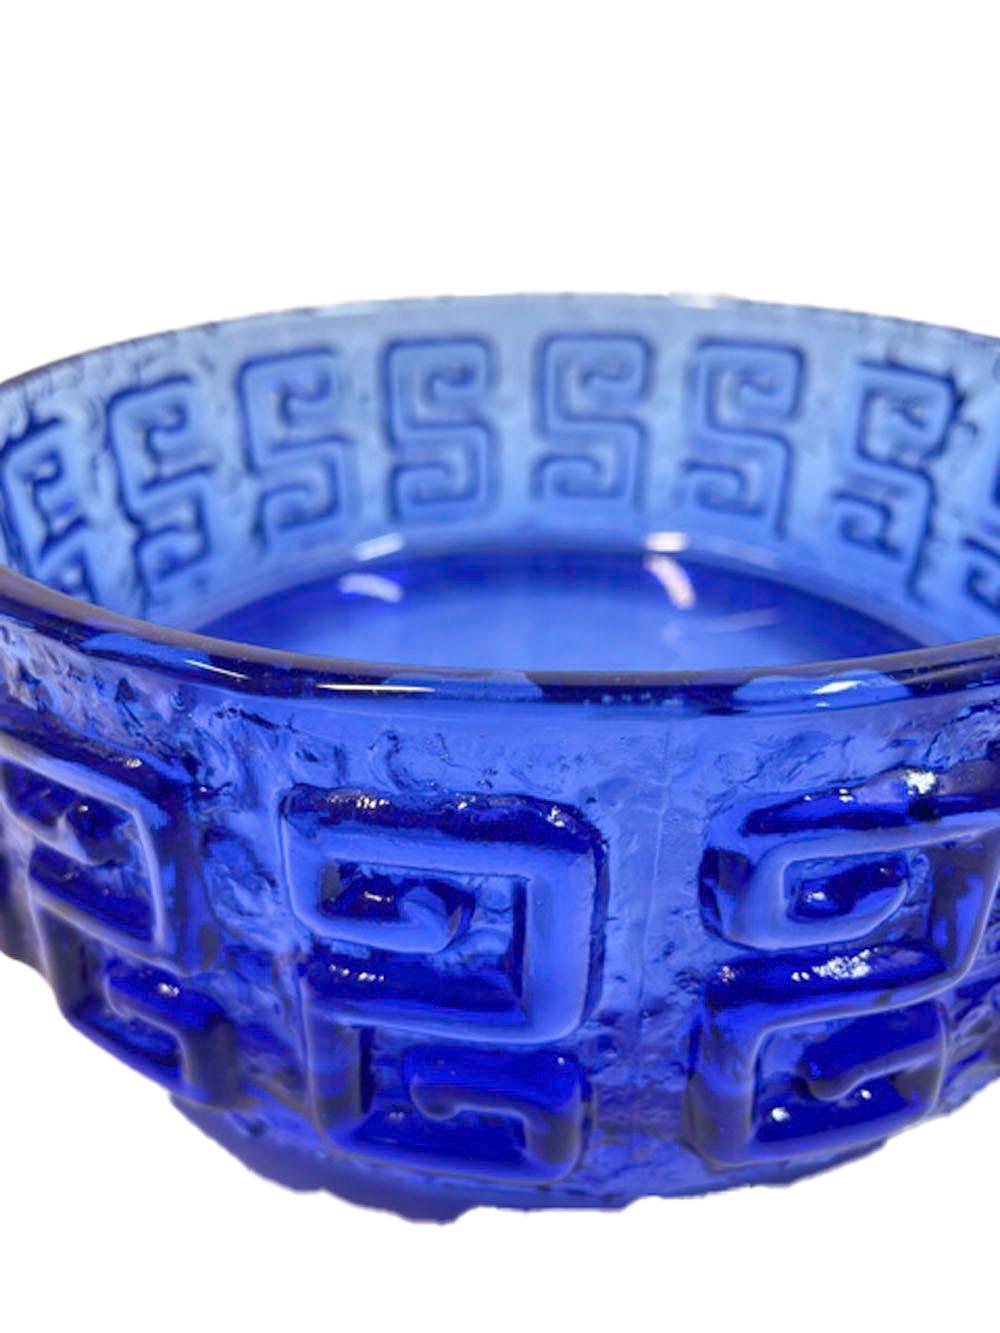 Swedish Mid-Century Modern Riihimaki Bowl in Kingfisher Blue with Raised Greek Key